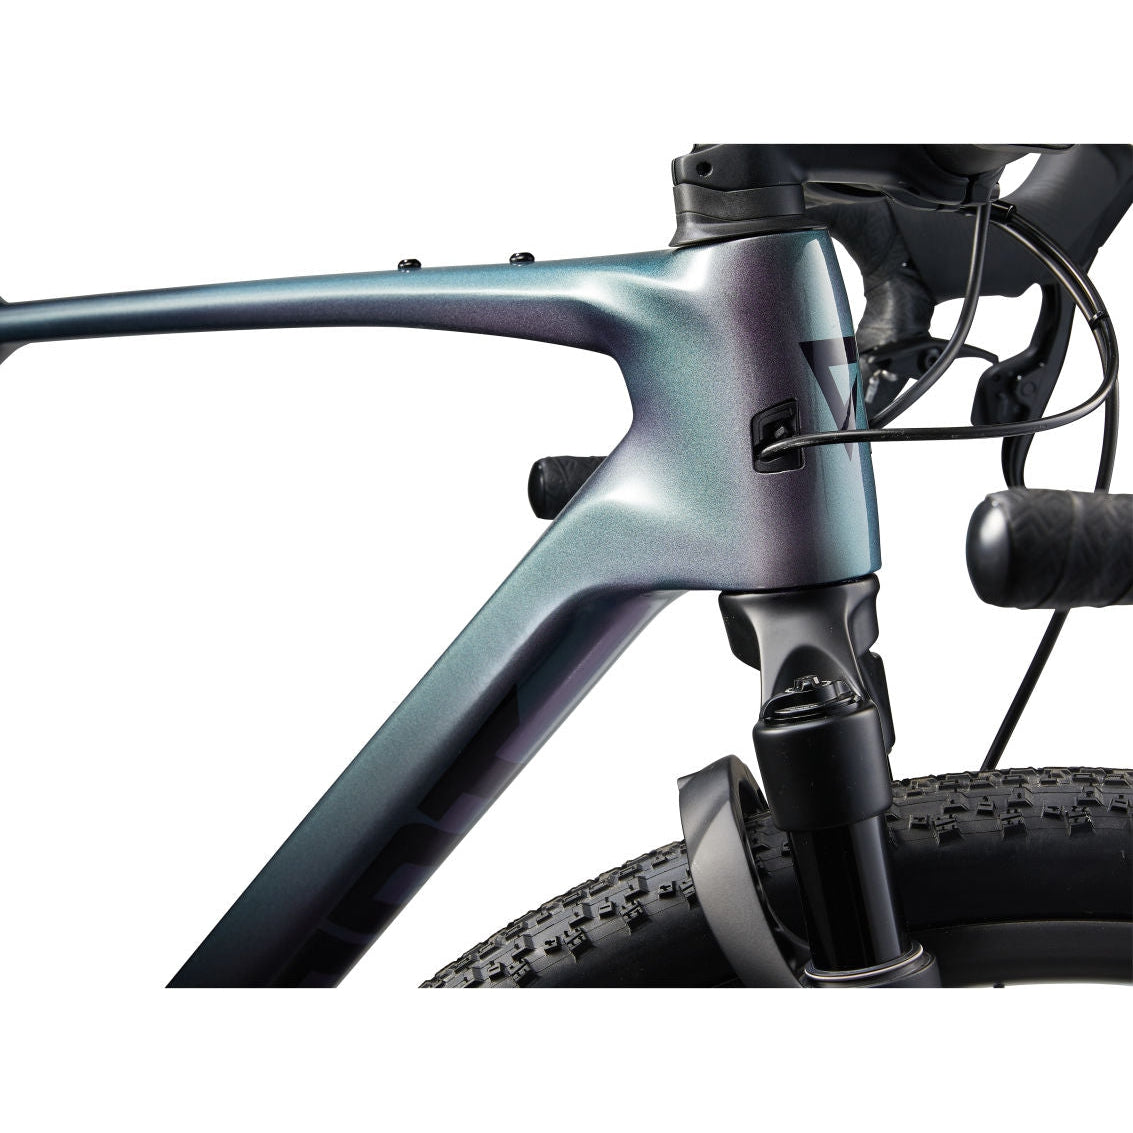 Giant Revolt X Advanced Pro 0 Gravel Bike - Bikes - Bicycle Warehouse